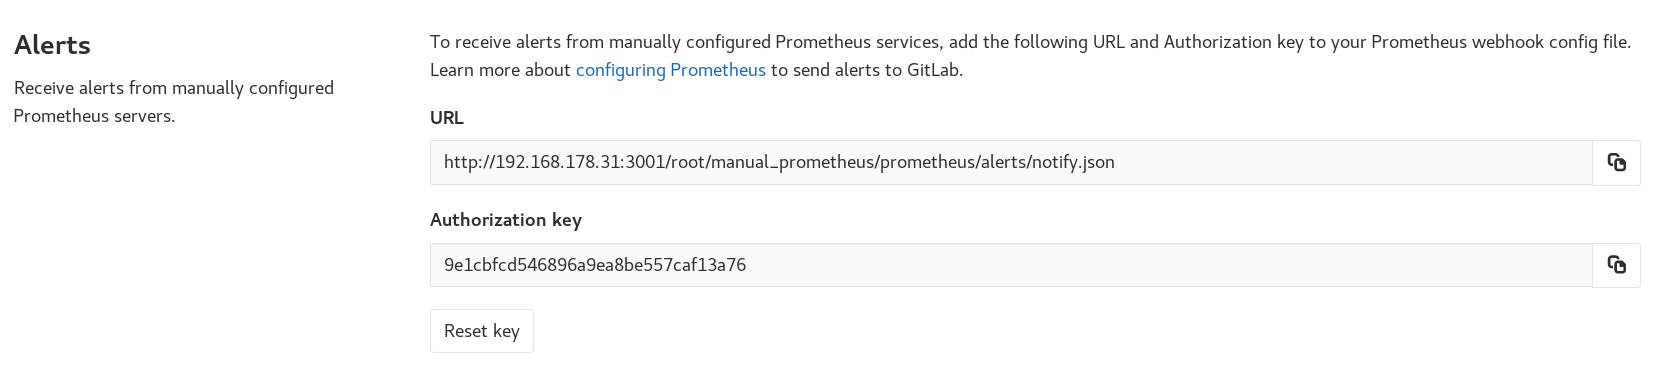 doc/user/project/integrations/img/prometheus_service_alerts.png